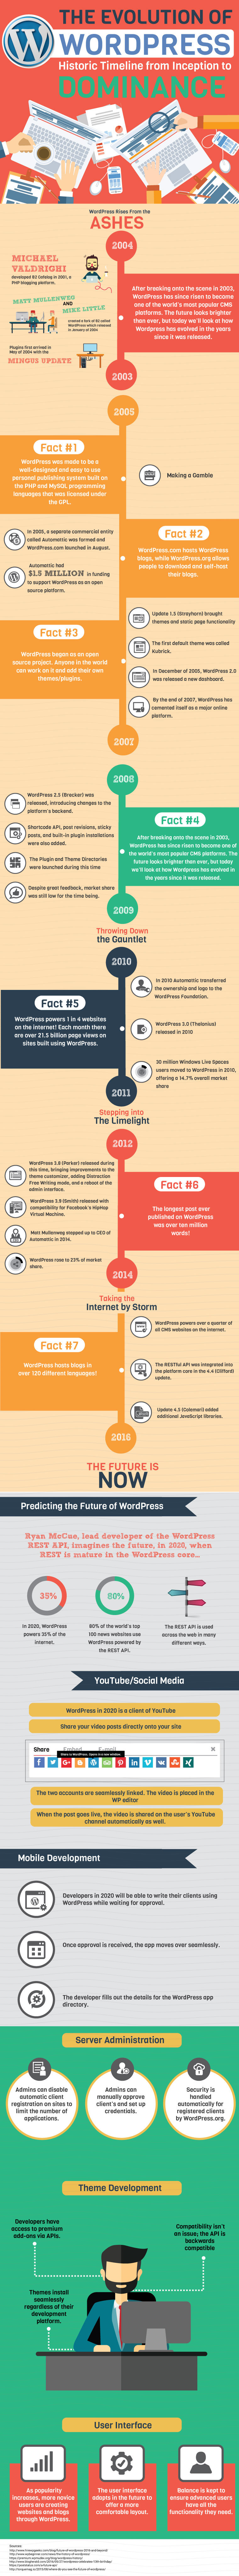 WordPress Timeline - infographic